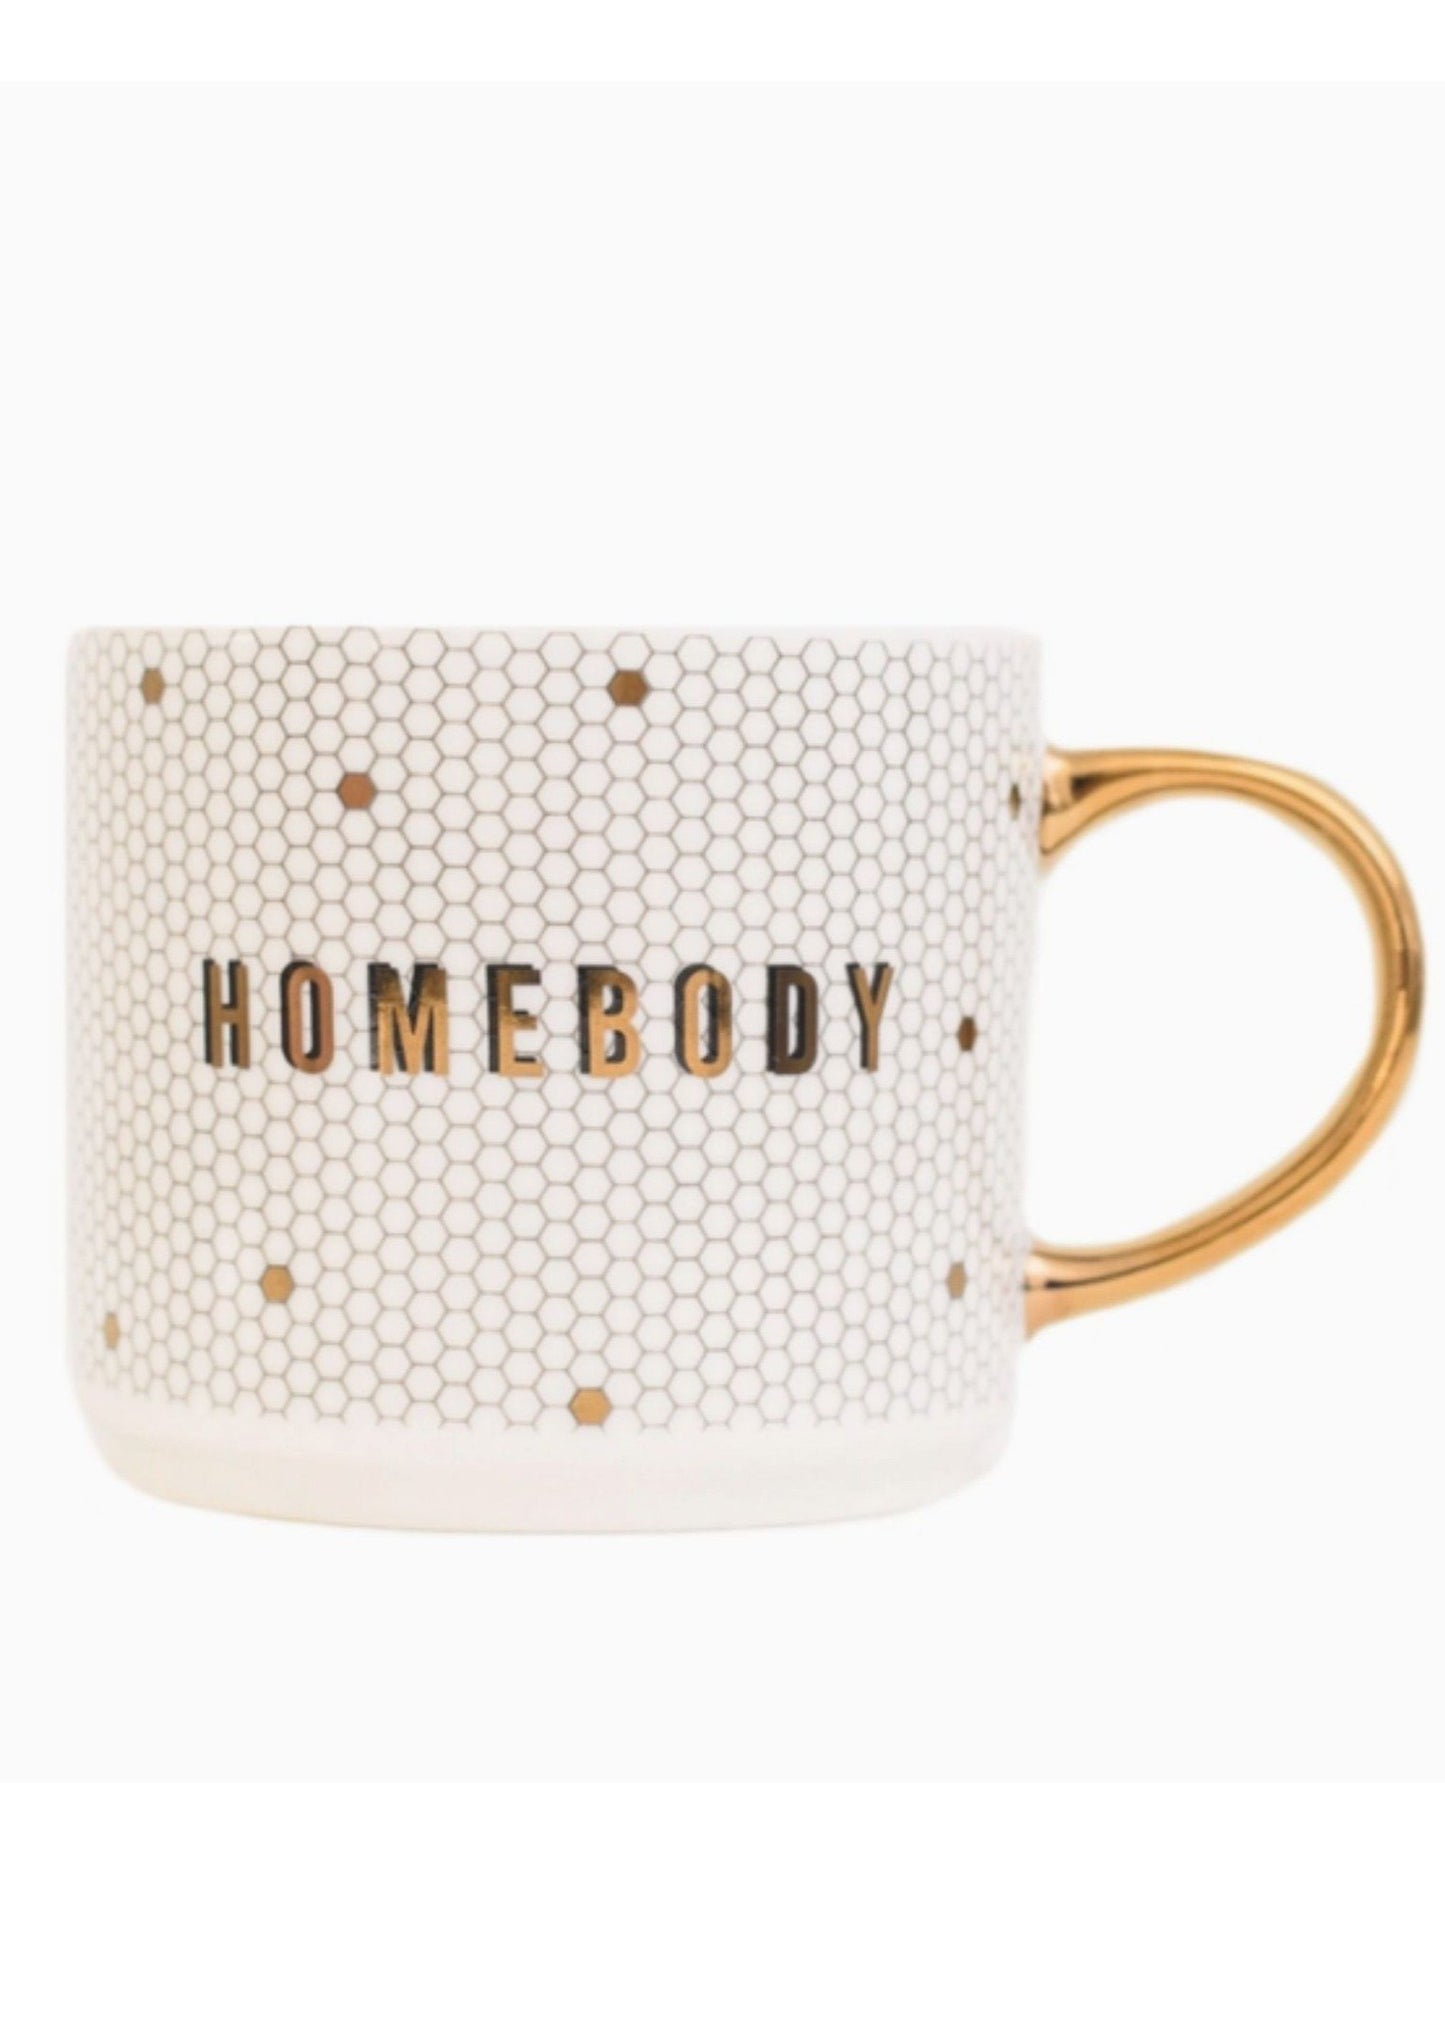 Homebody Gold Detail Coffee Mug Home & Lifestyle Sweet Water Decor